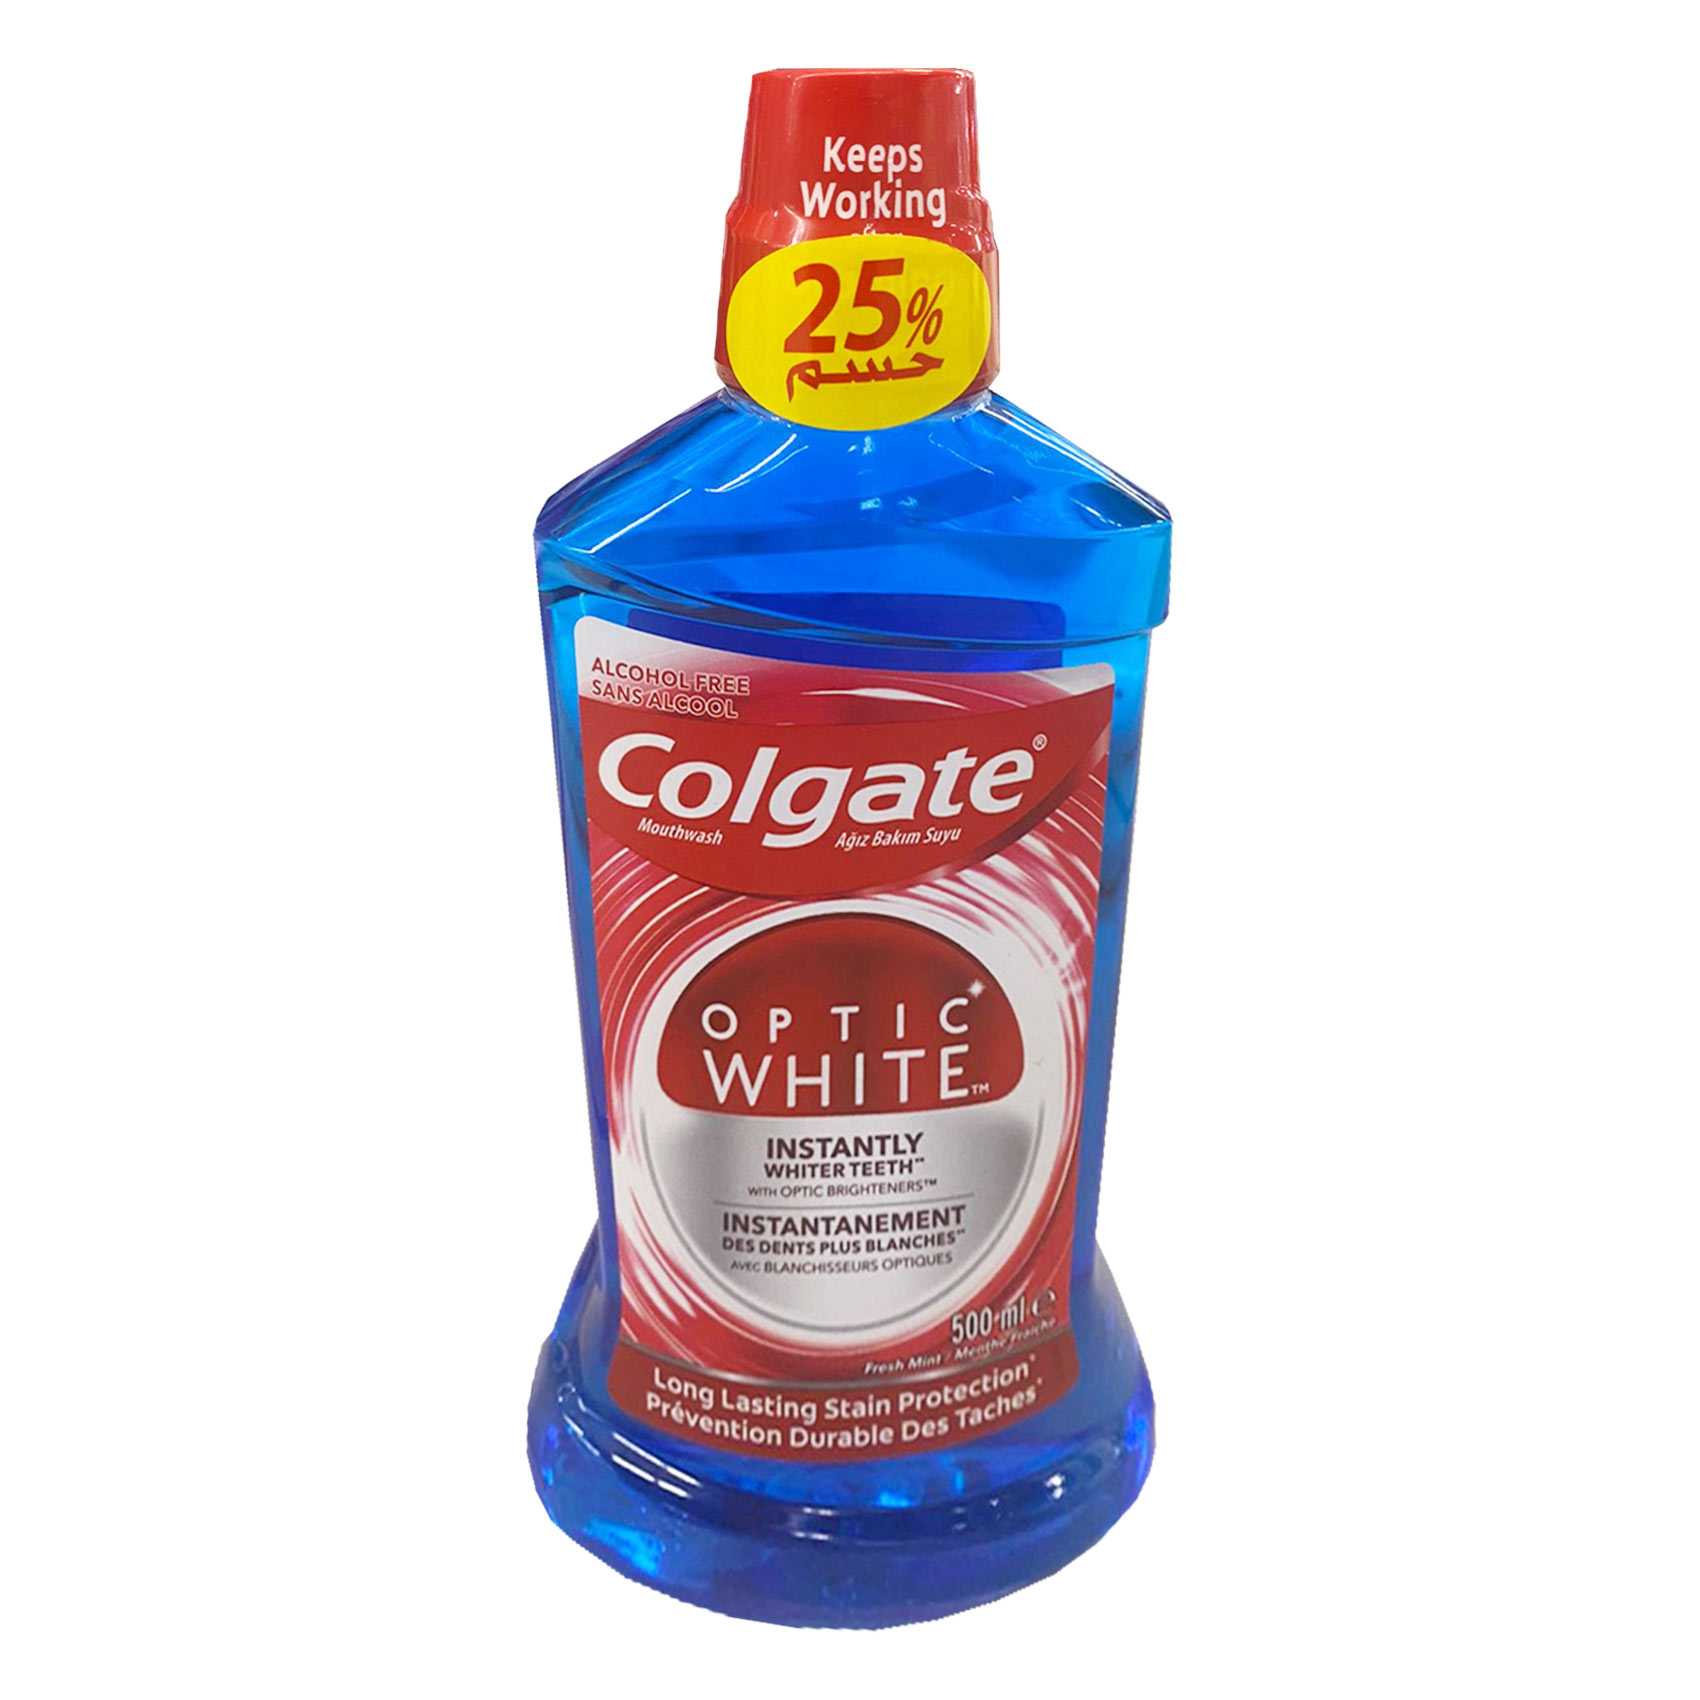 Colgate Optic White Mouthwash 500ml 25%off